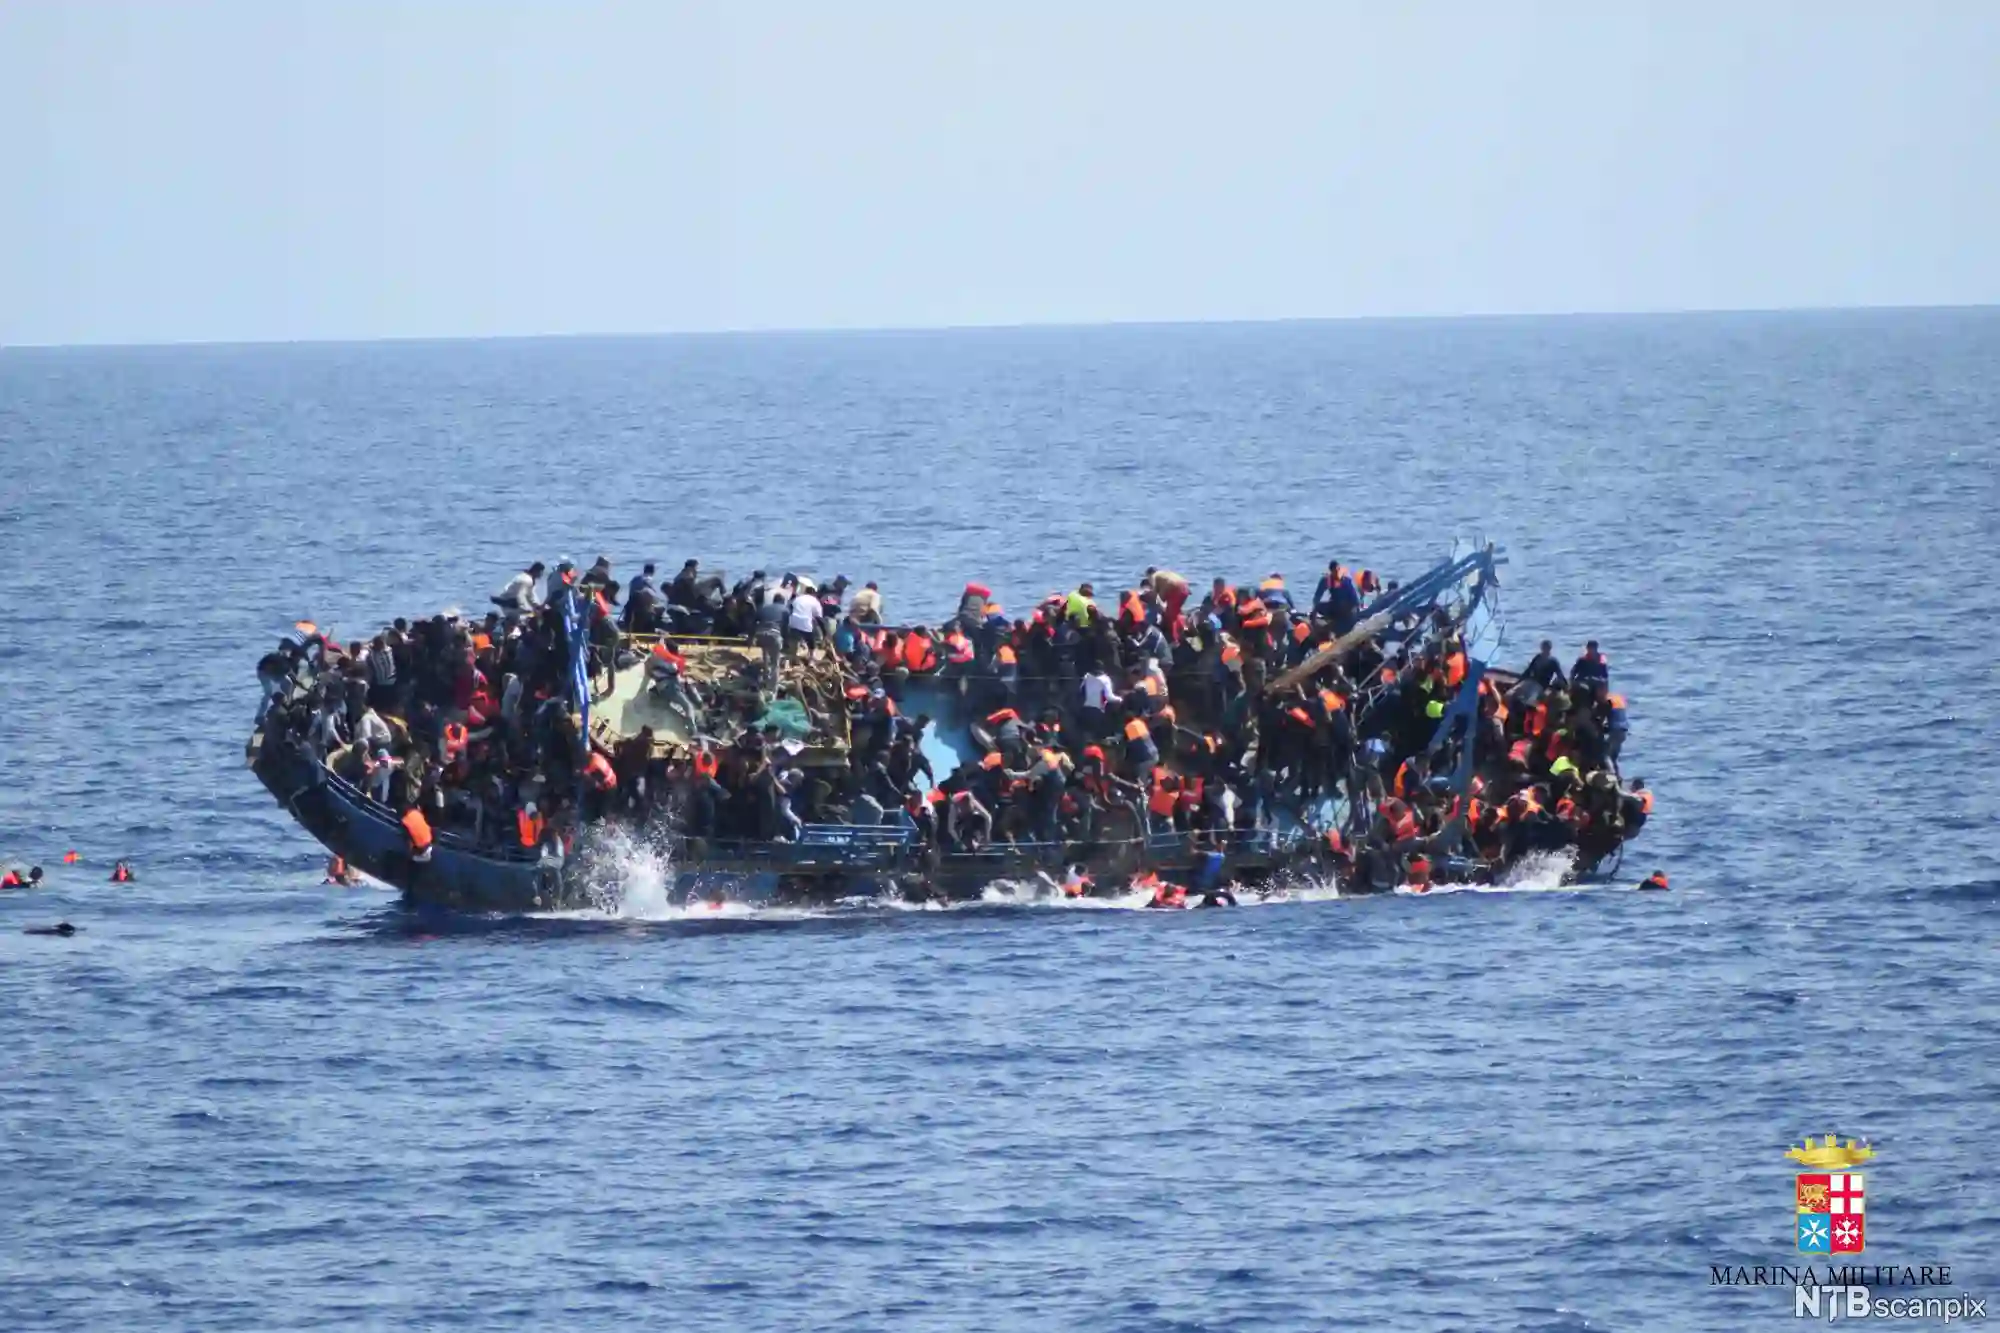 Lebih dari 1.500 Orang Migran Meninggal dan Menghilang di Mediterania Guna Mencari Suaka ke Eropa